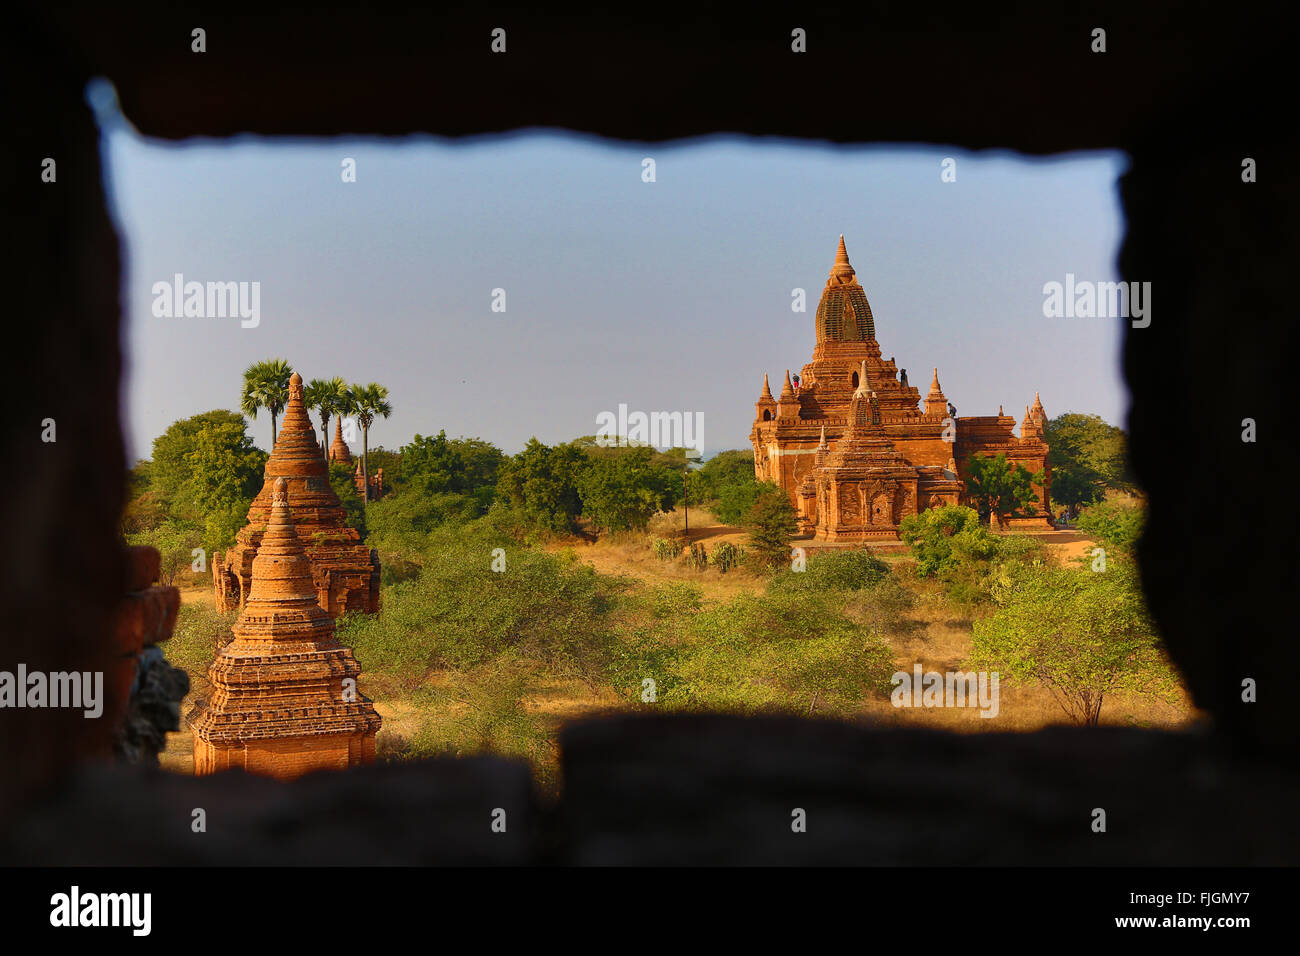 Pagodas and temples on the Plain of Bagan, Bagan, Myanmar (Burma) Stock Photo